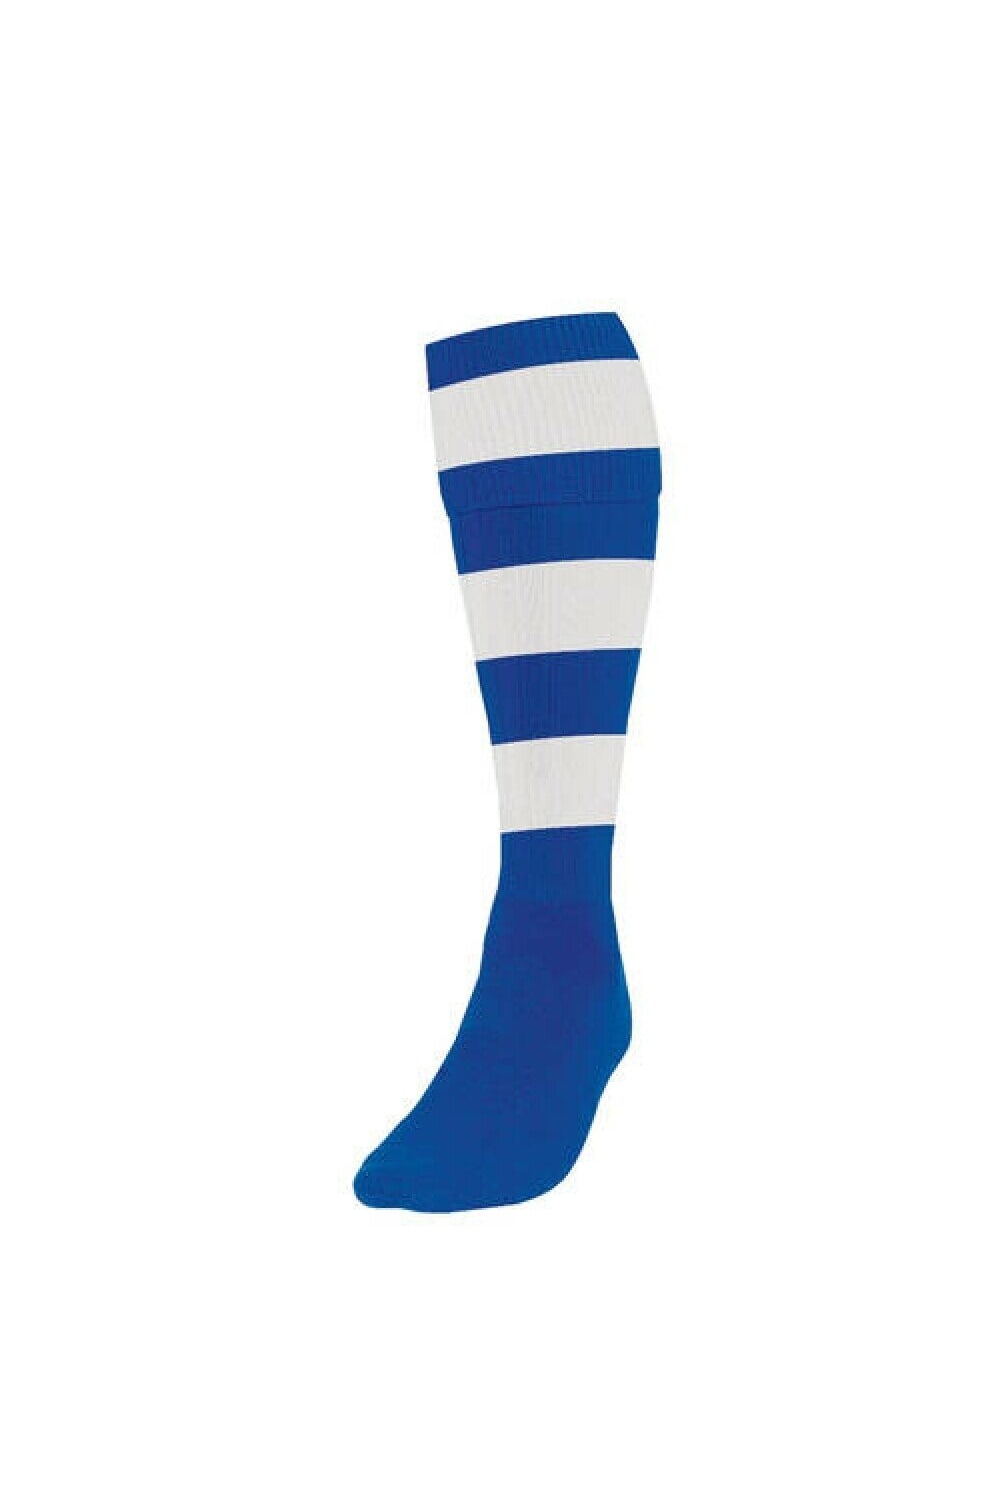 Precision Unisex Adult Hooped Football Socks (Royal Blue/White)